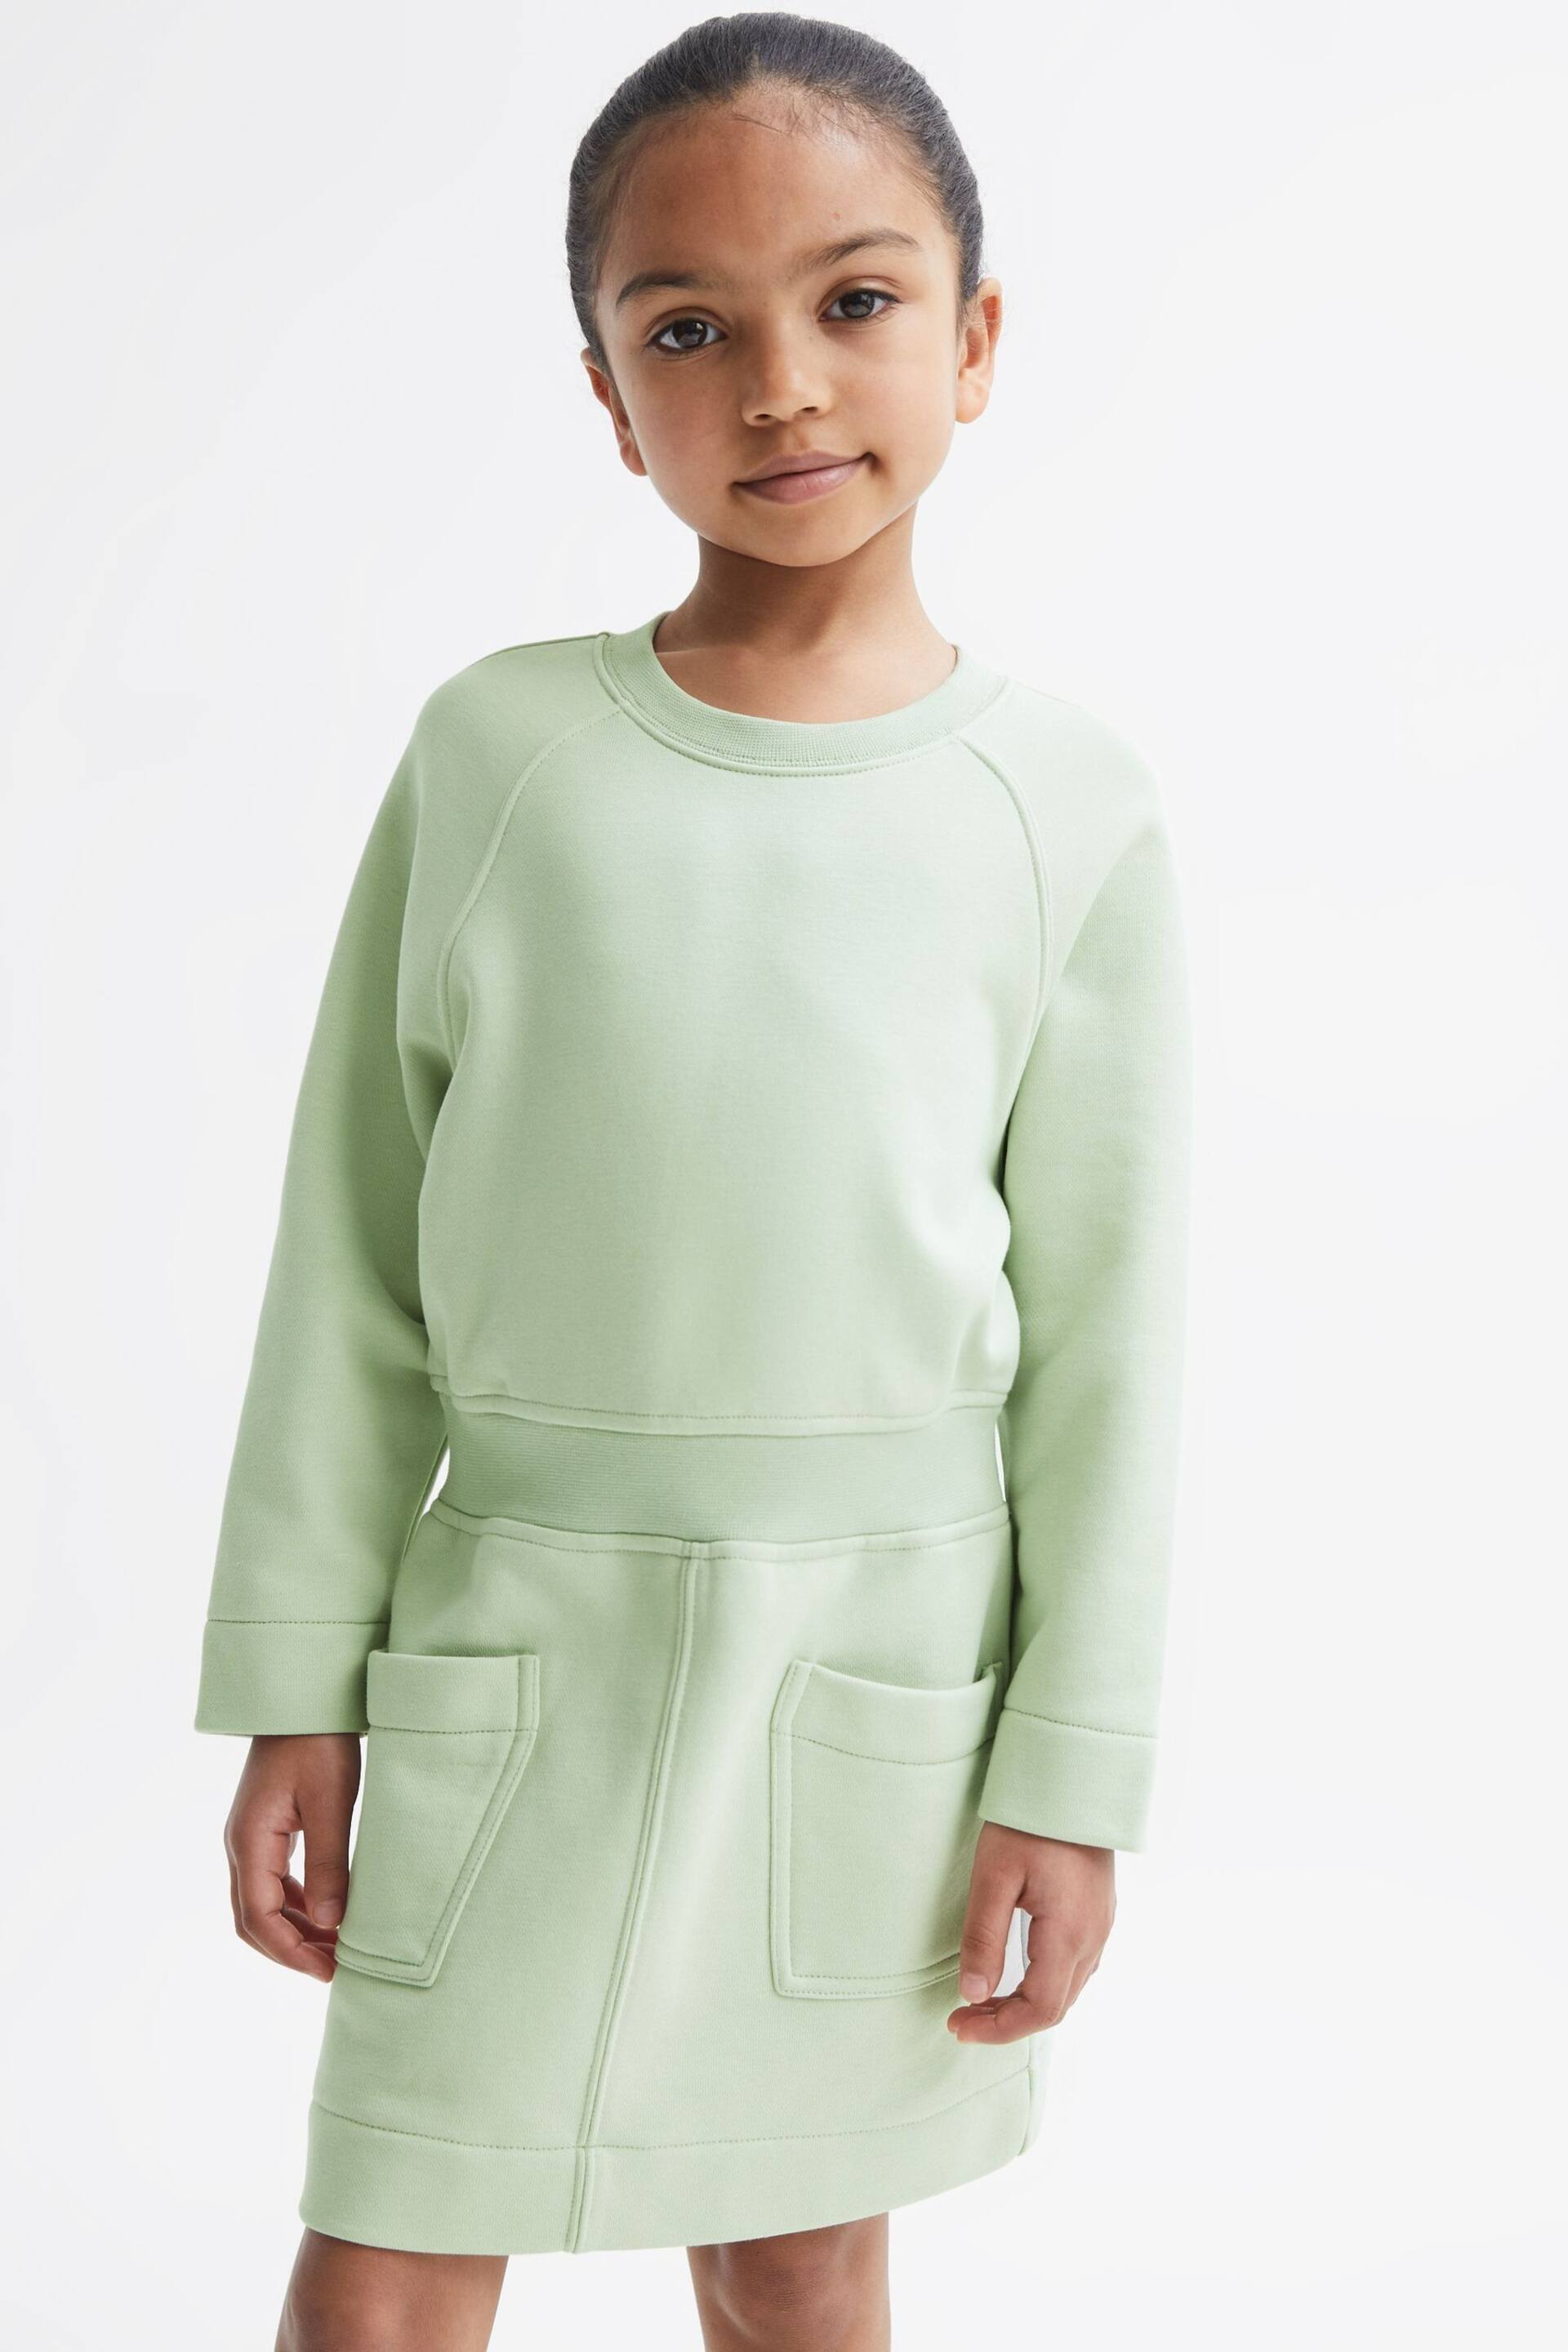 Reiss Sage Janine Junior Sweatshirt Dress - Image 3 of 8